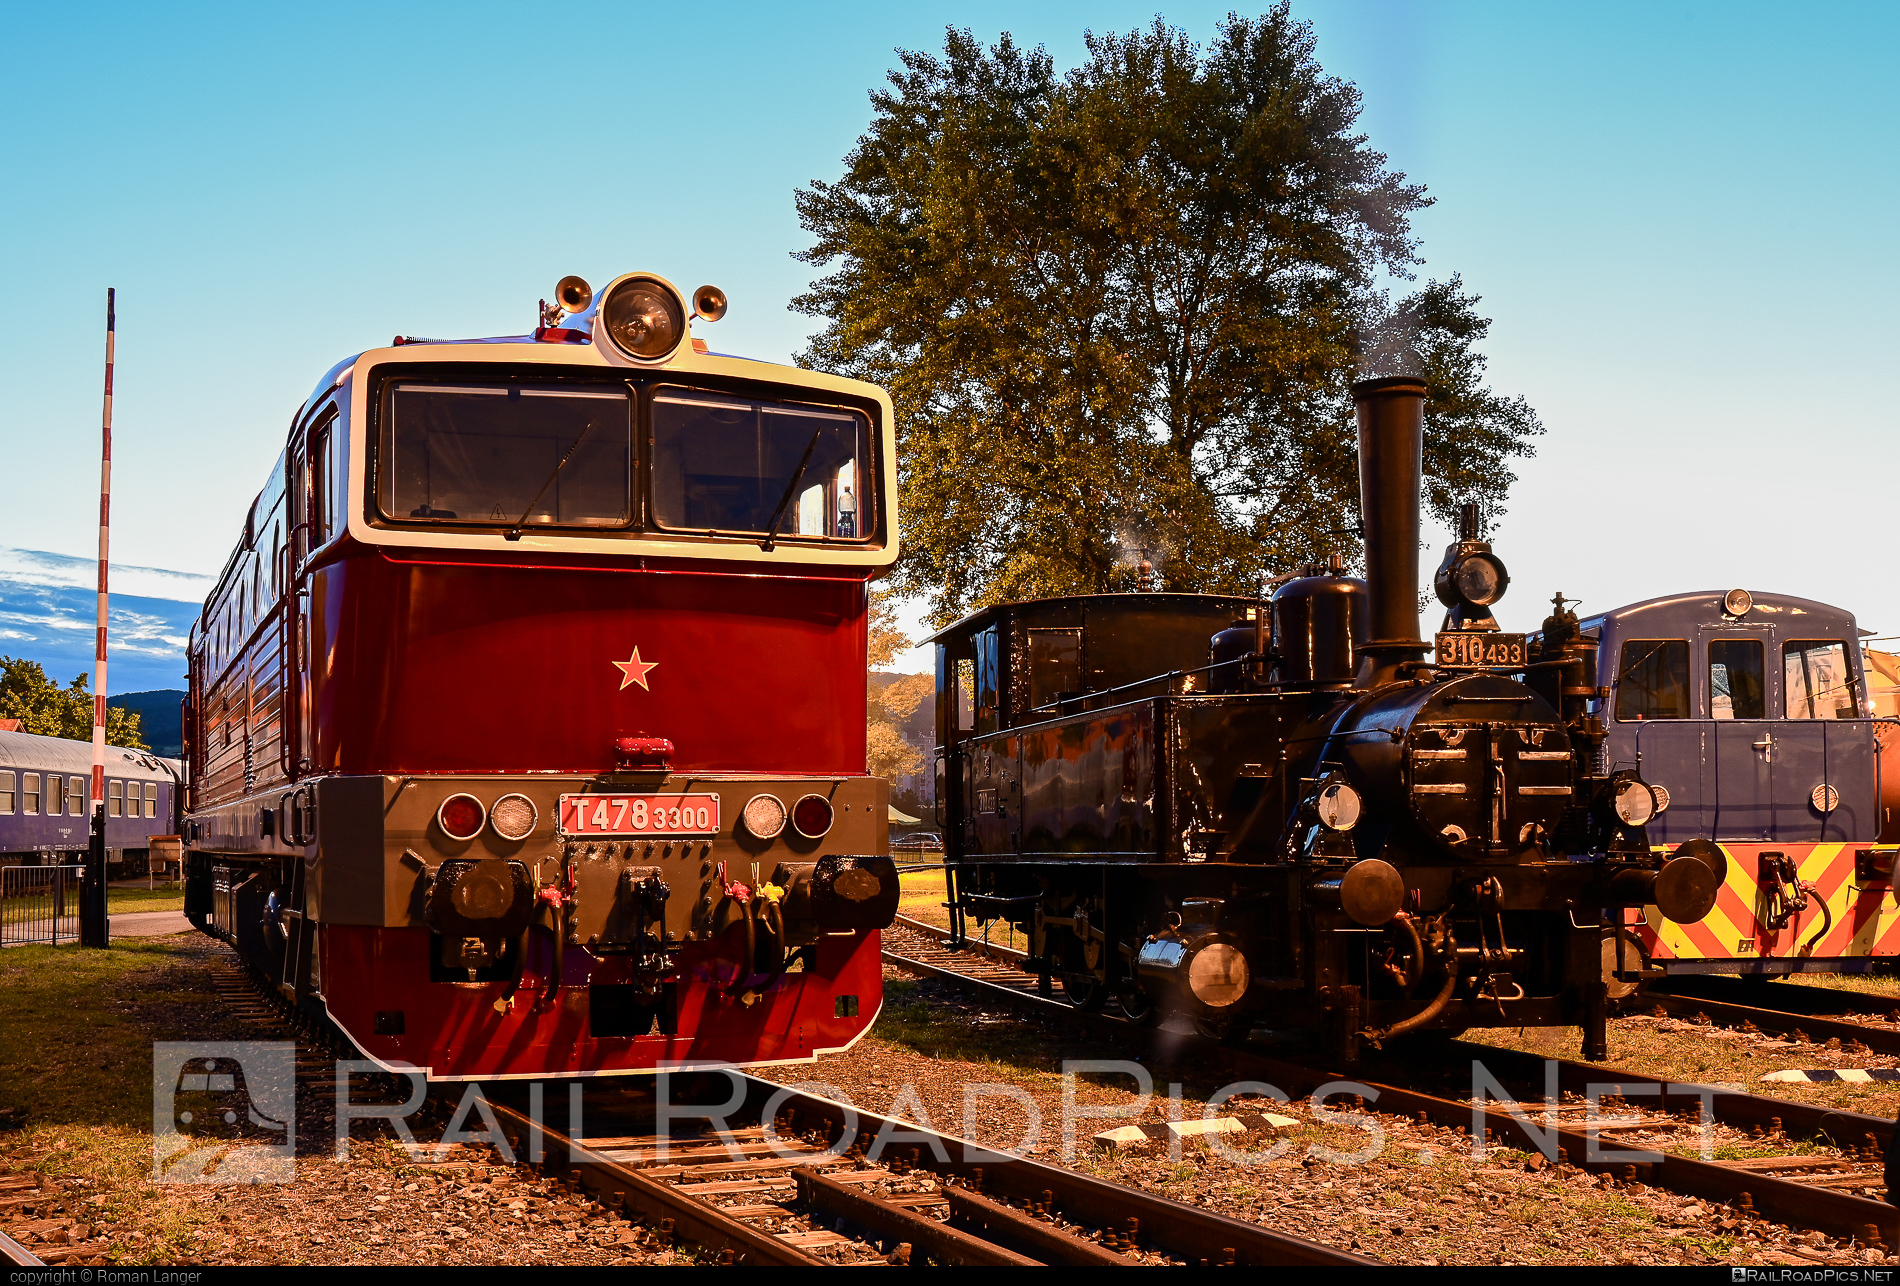 ČKD T 478.3 (753) - T478.3300 operated by Klub železničných historických vozidiel Poprad #brejlovec #ckd #ckdclass753 #ckdt4783 #csd #kzhv #locomotive753 #okuliarnik